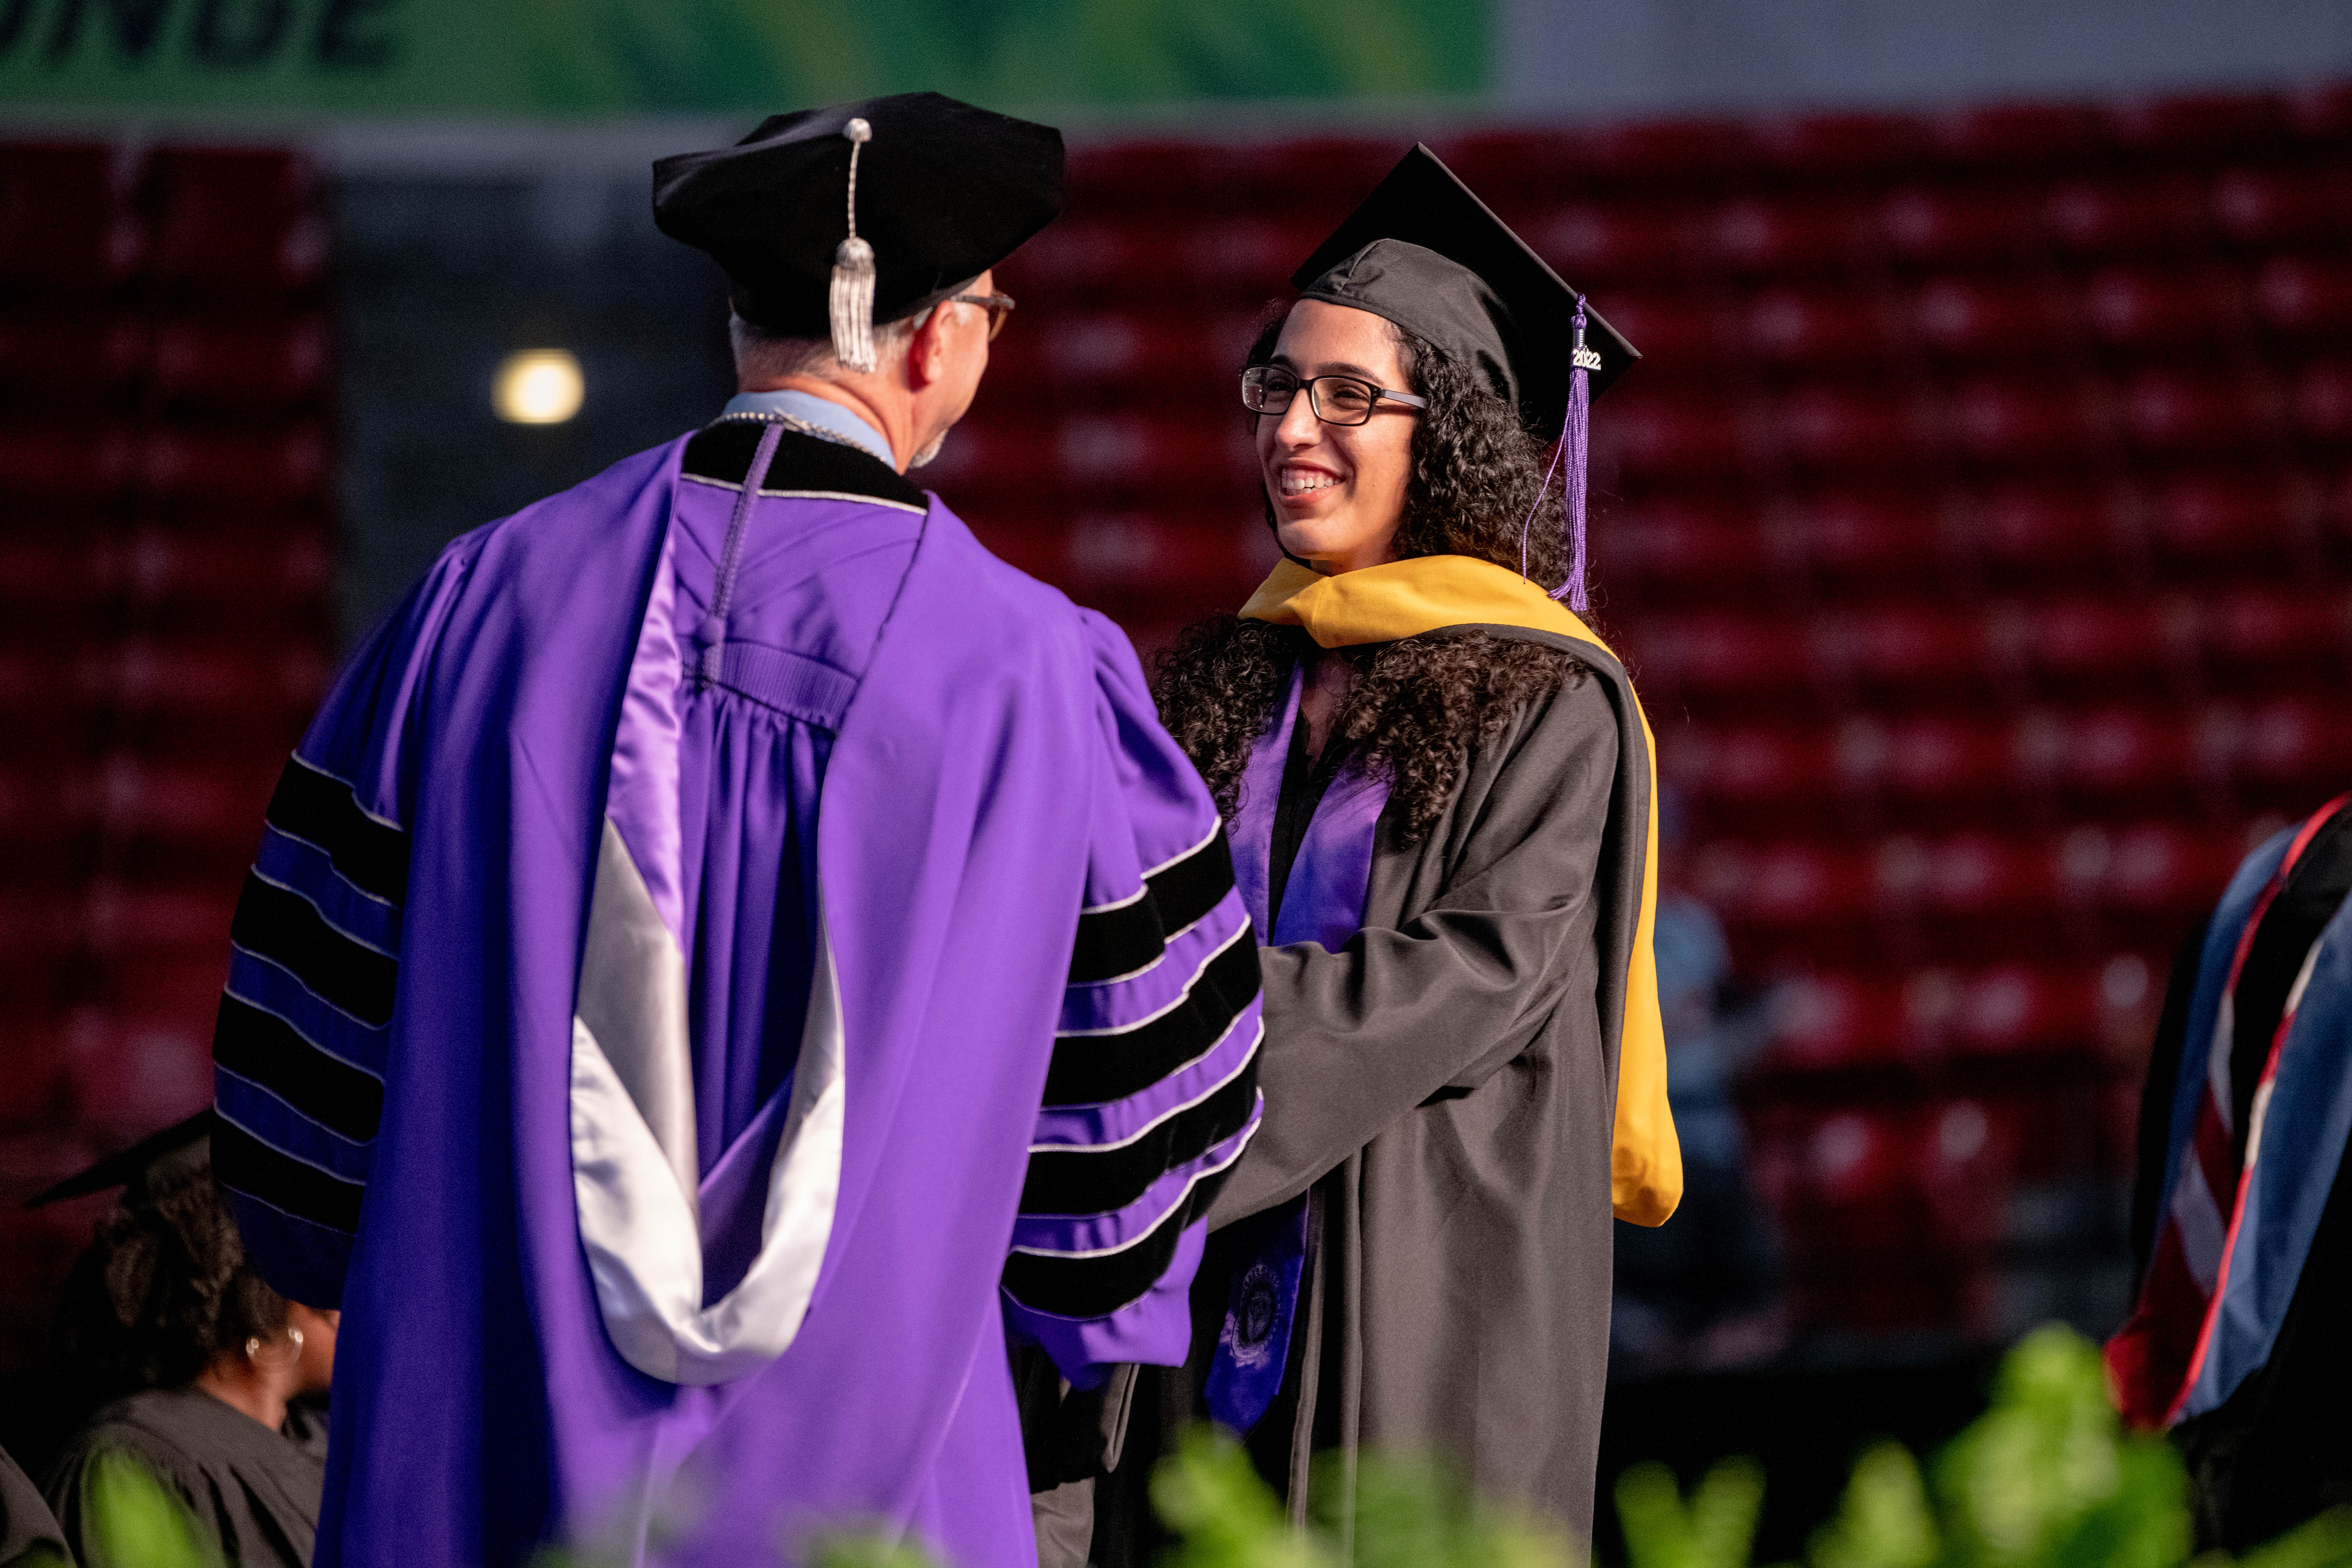 Student smiling at graduation